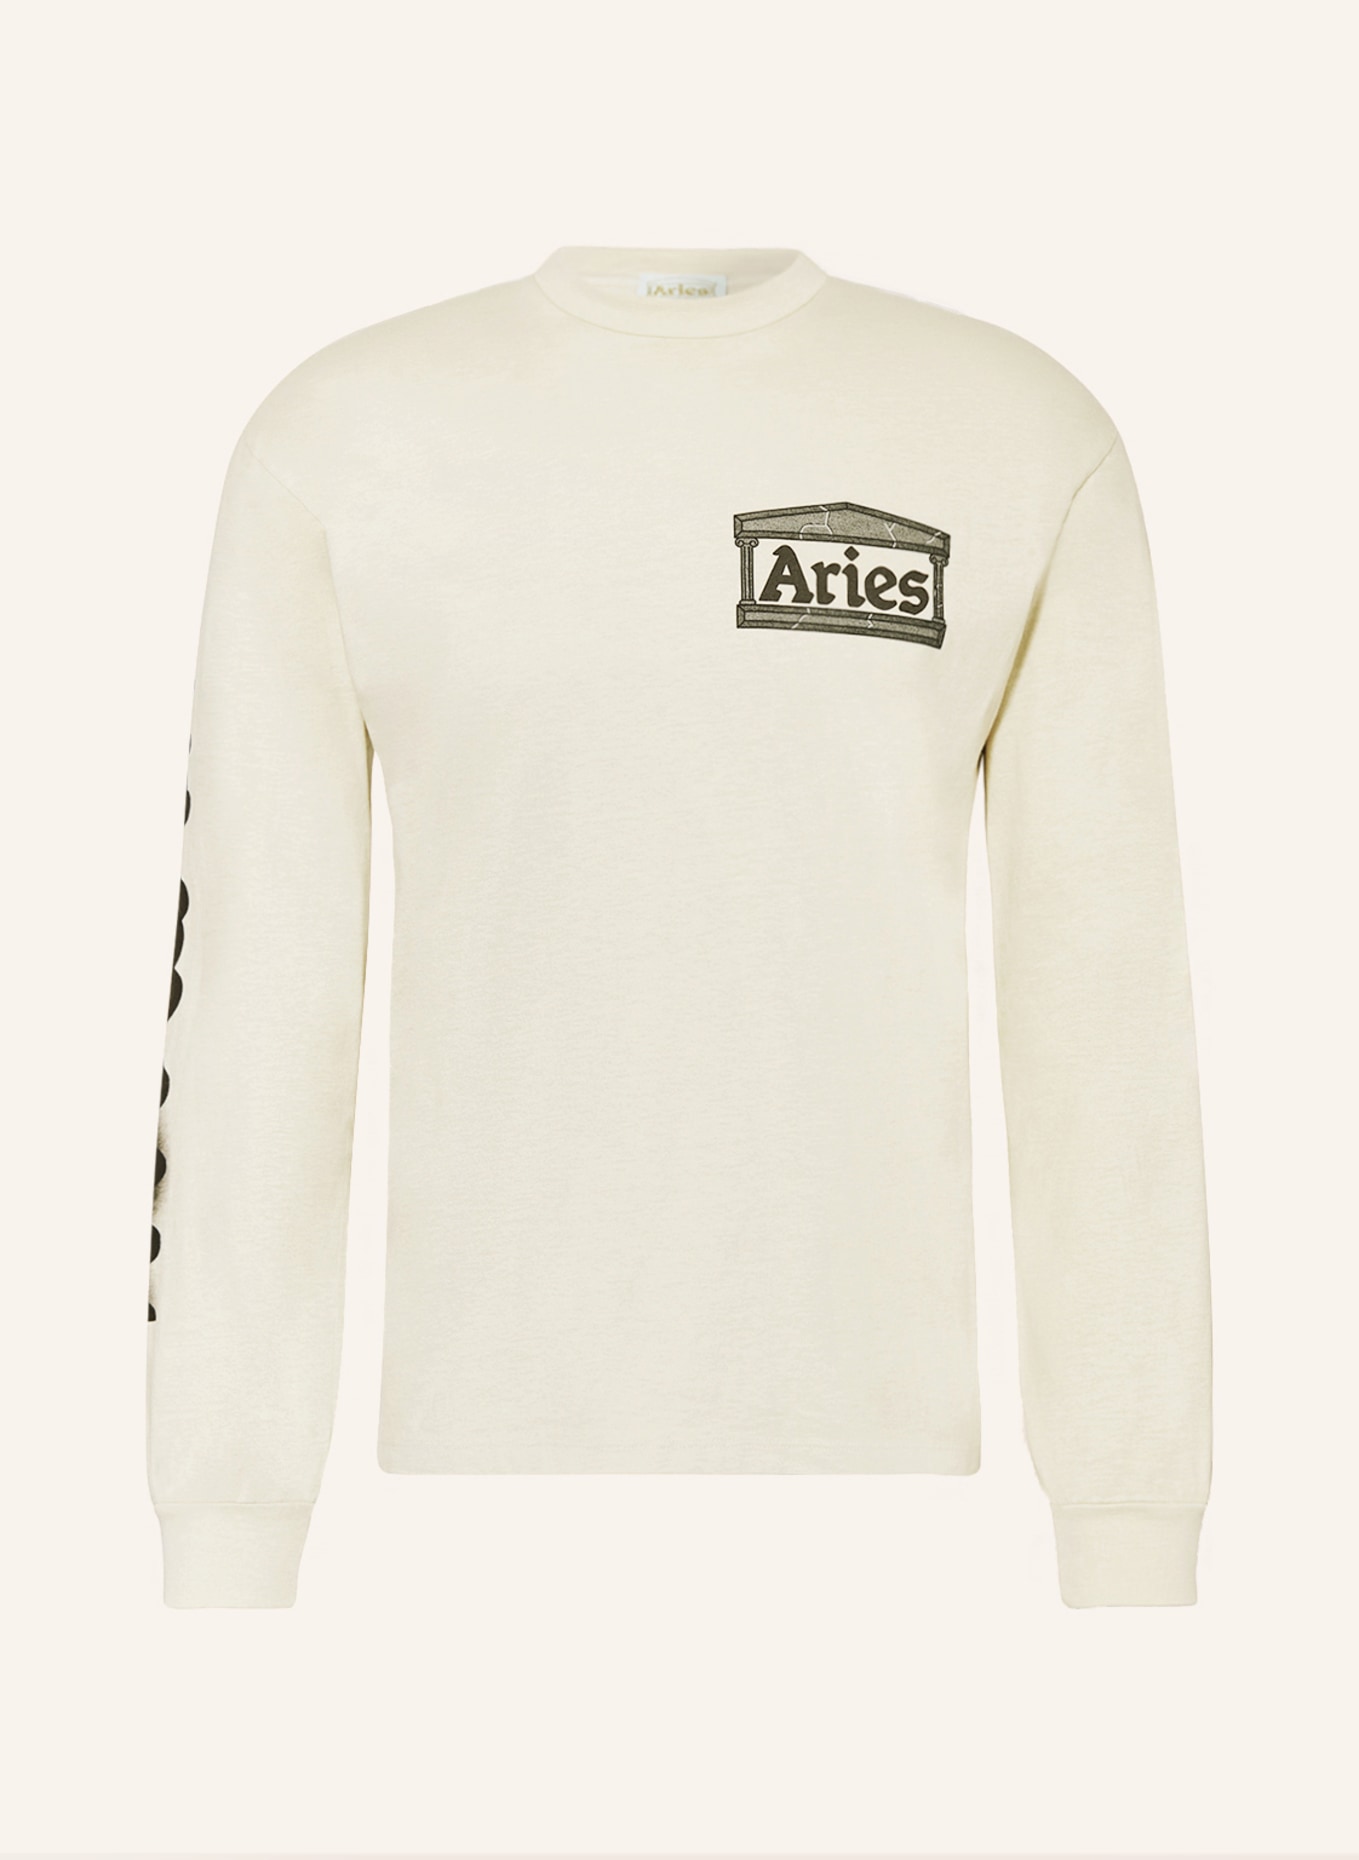 Aries Arise Long sleeve shirt